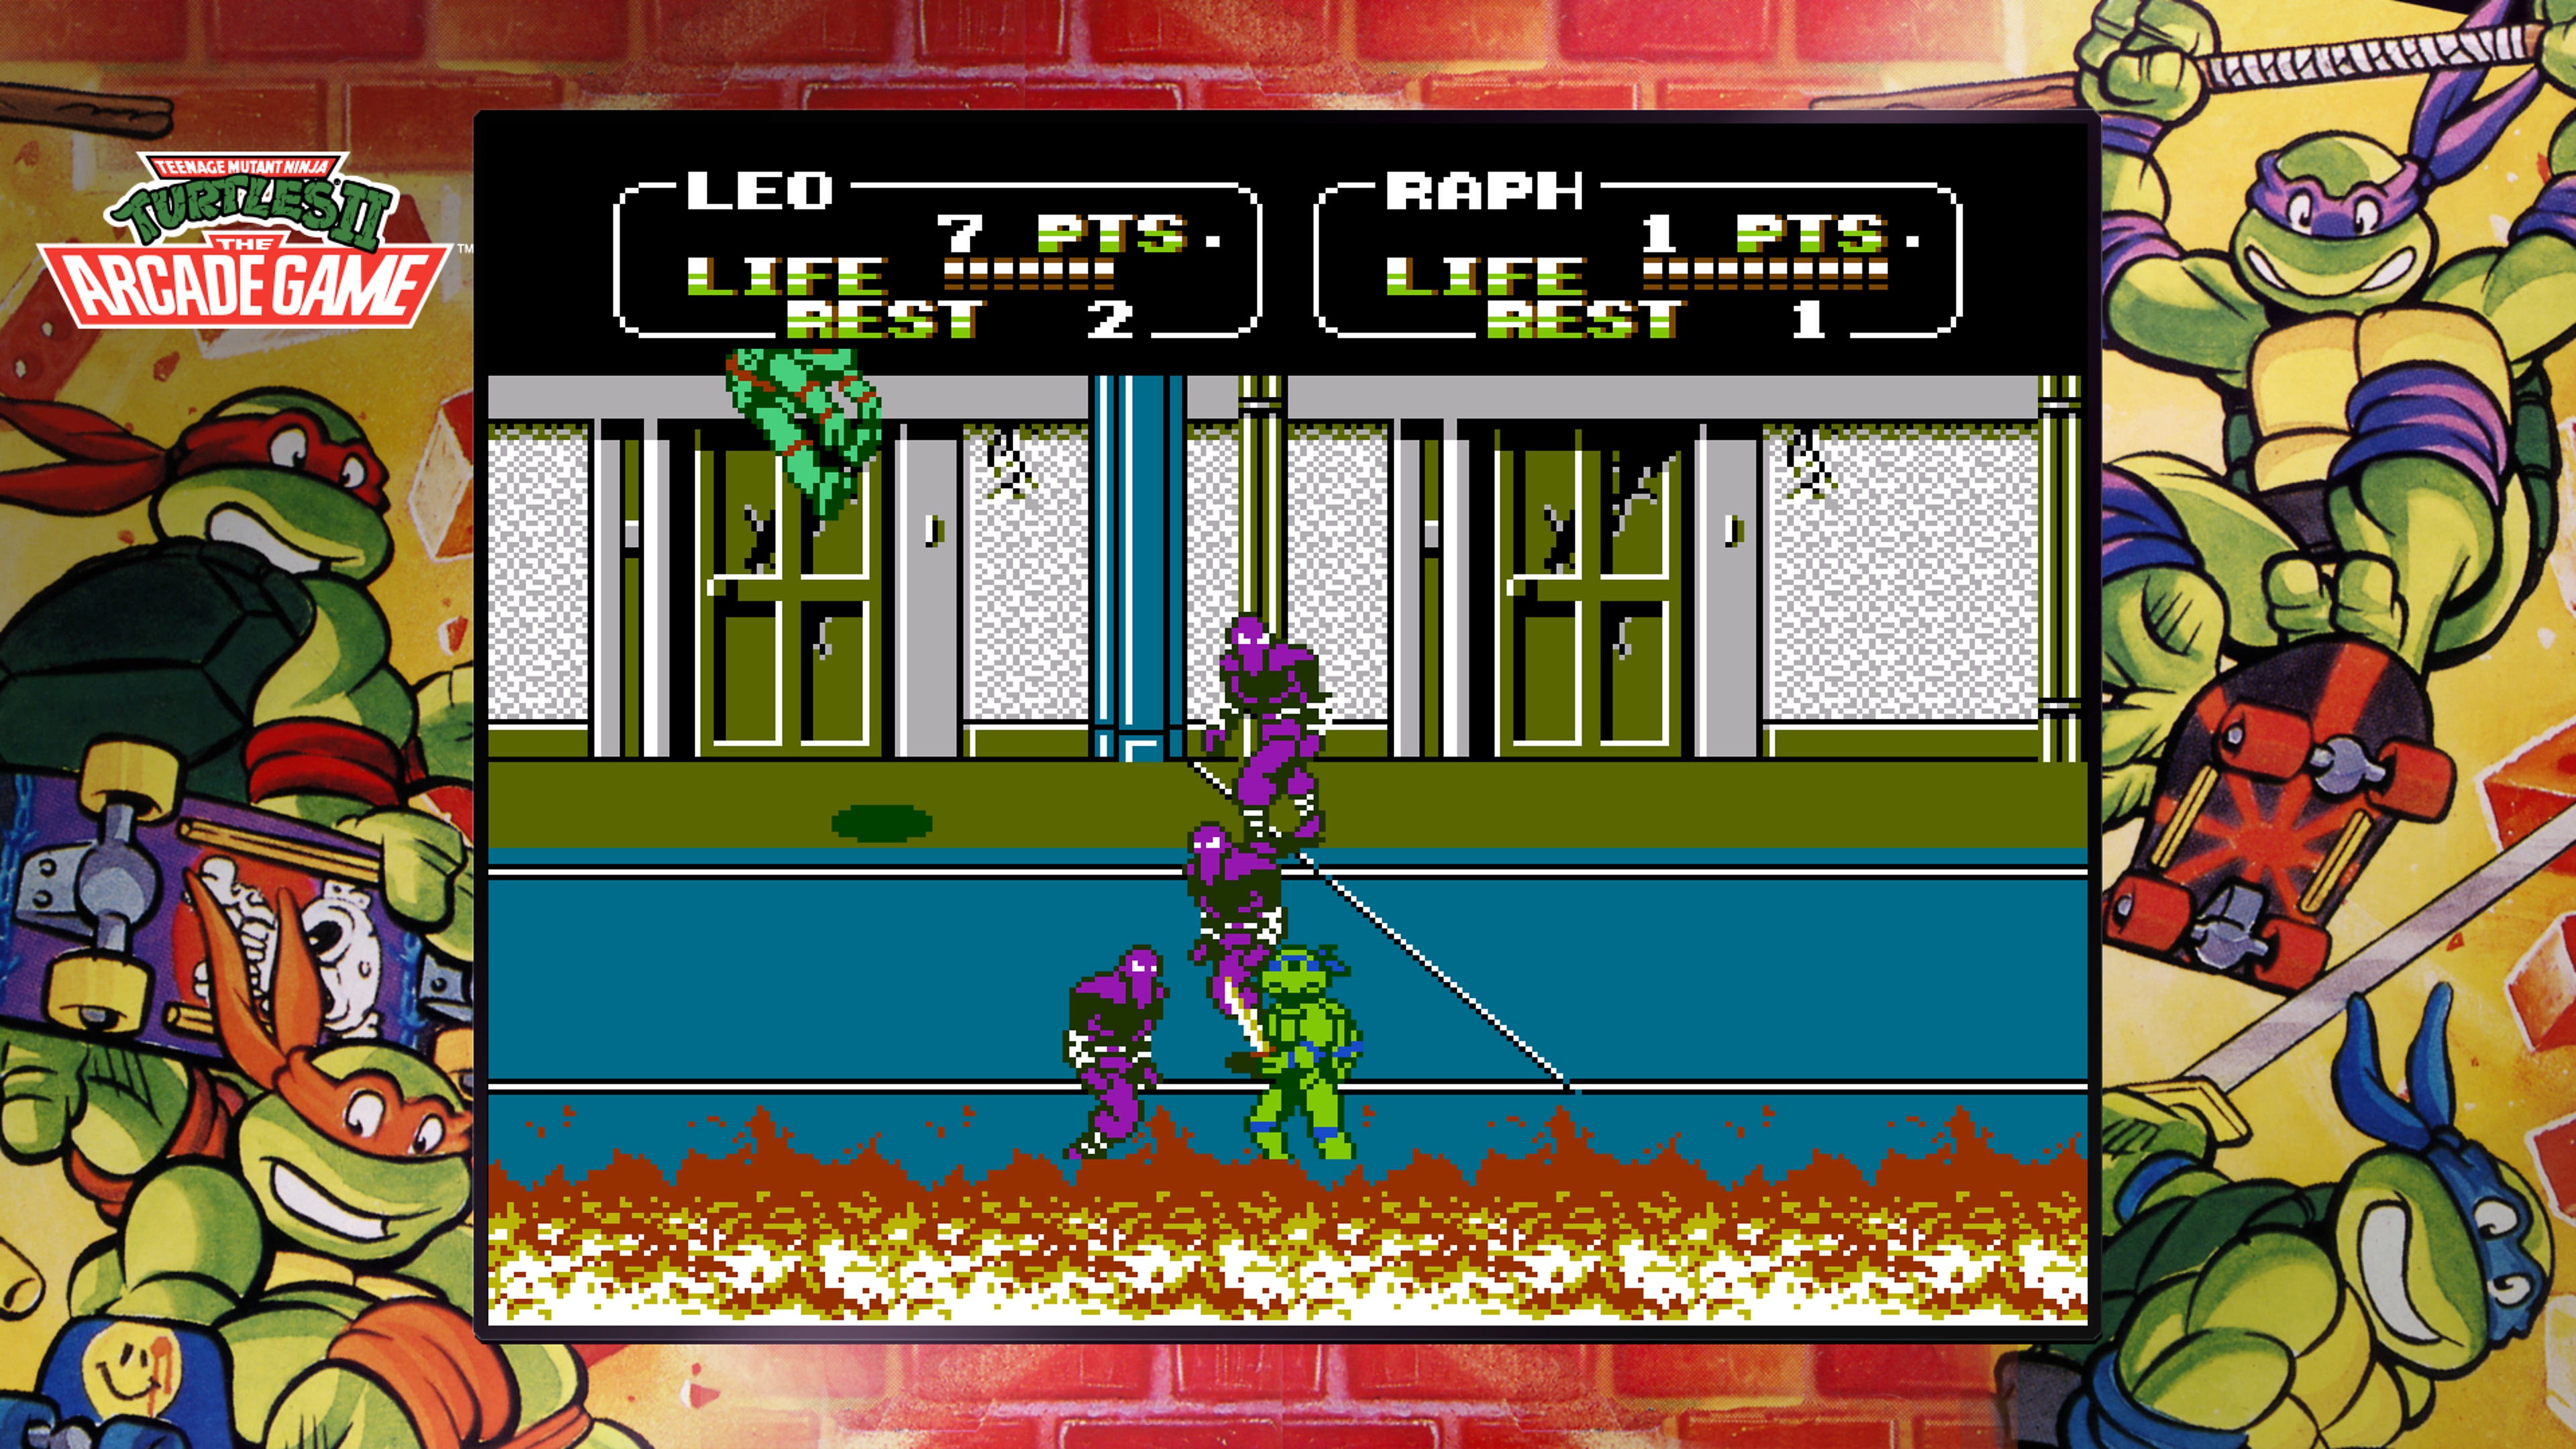 Teenage Mutant Ninja Turtles Collection - The Arcade Game screenshot showing Leonardo fighting the Foot Clan